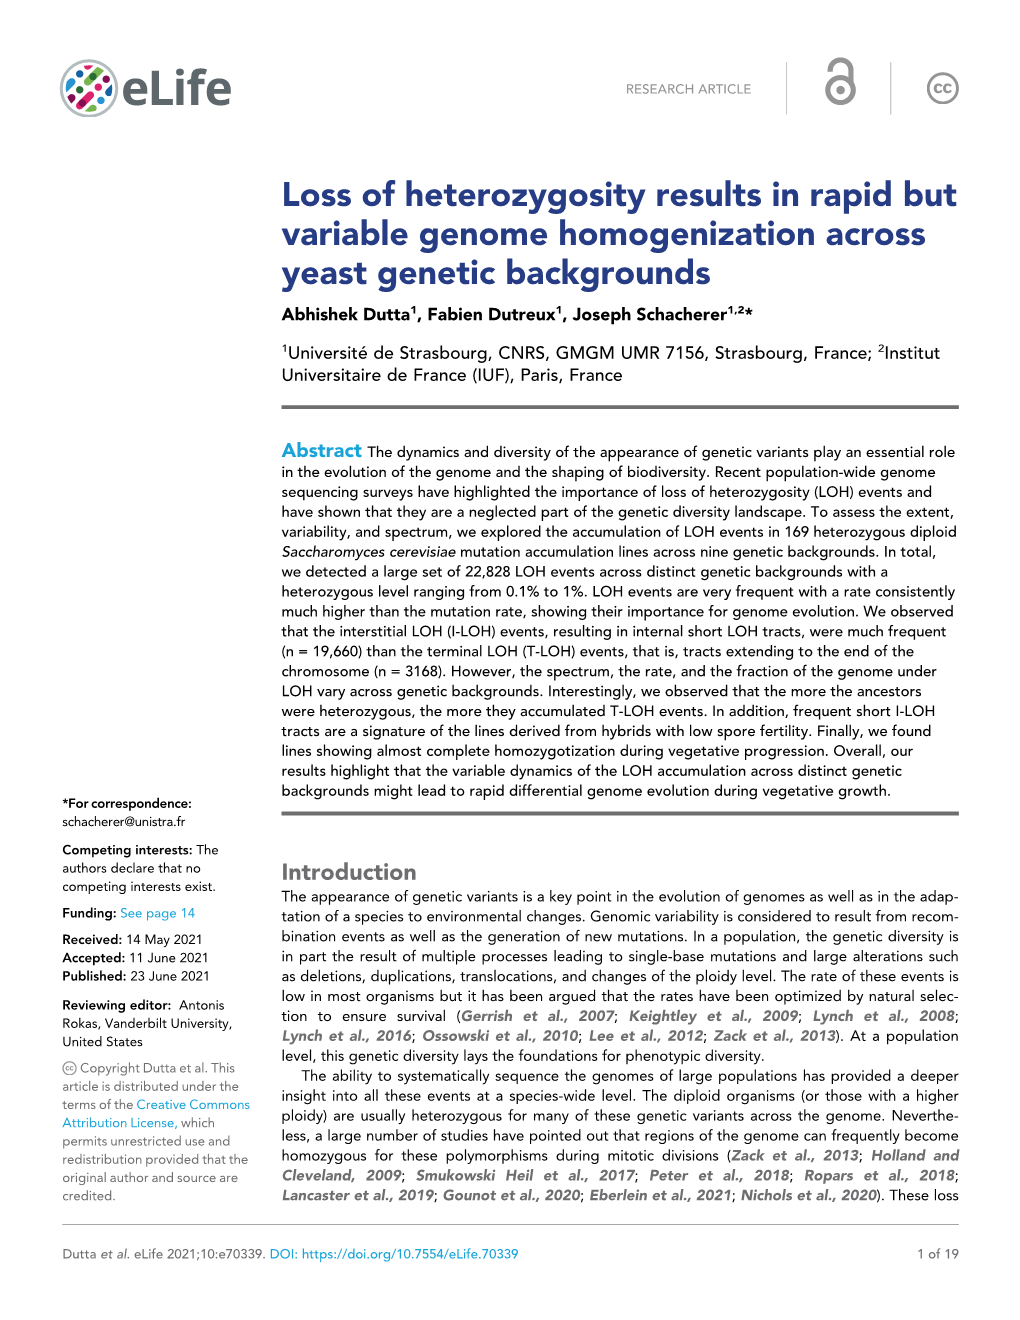 Loss of Heterozygosity Results in Rapid but Variable Genome Homogenization Across Yeast Genetic Backgrounds Abhishek Dutta1, Fabien Dutreux1, Joseph Schacherer1,2*